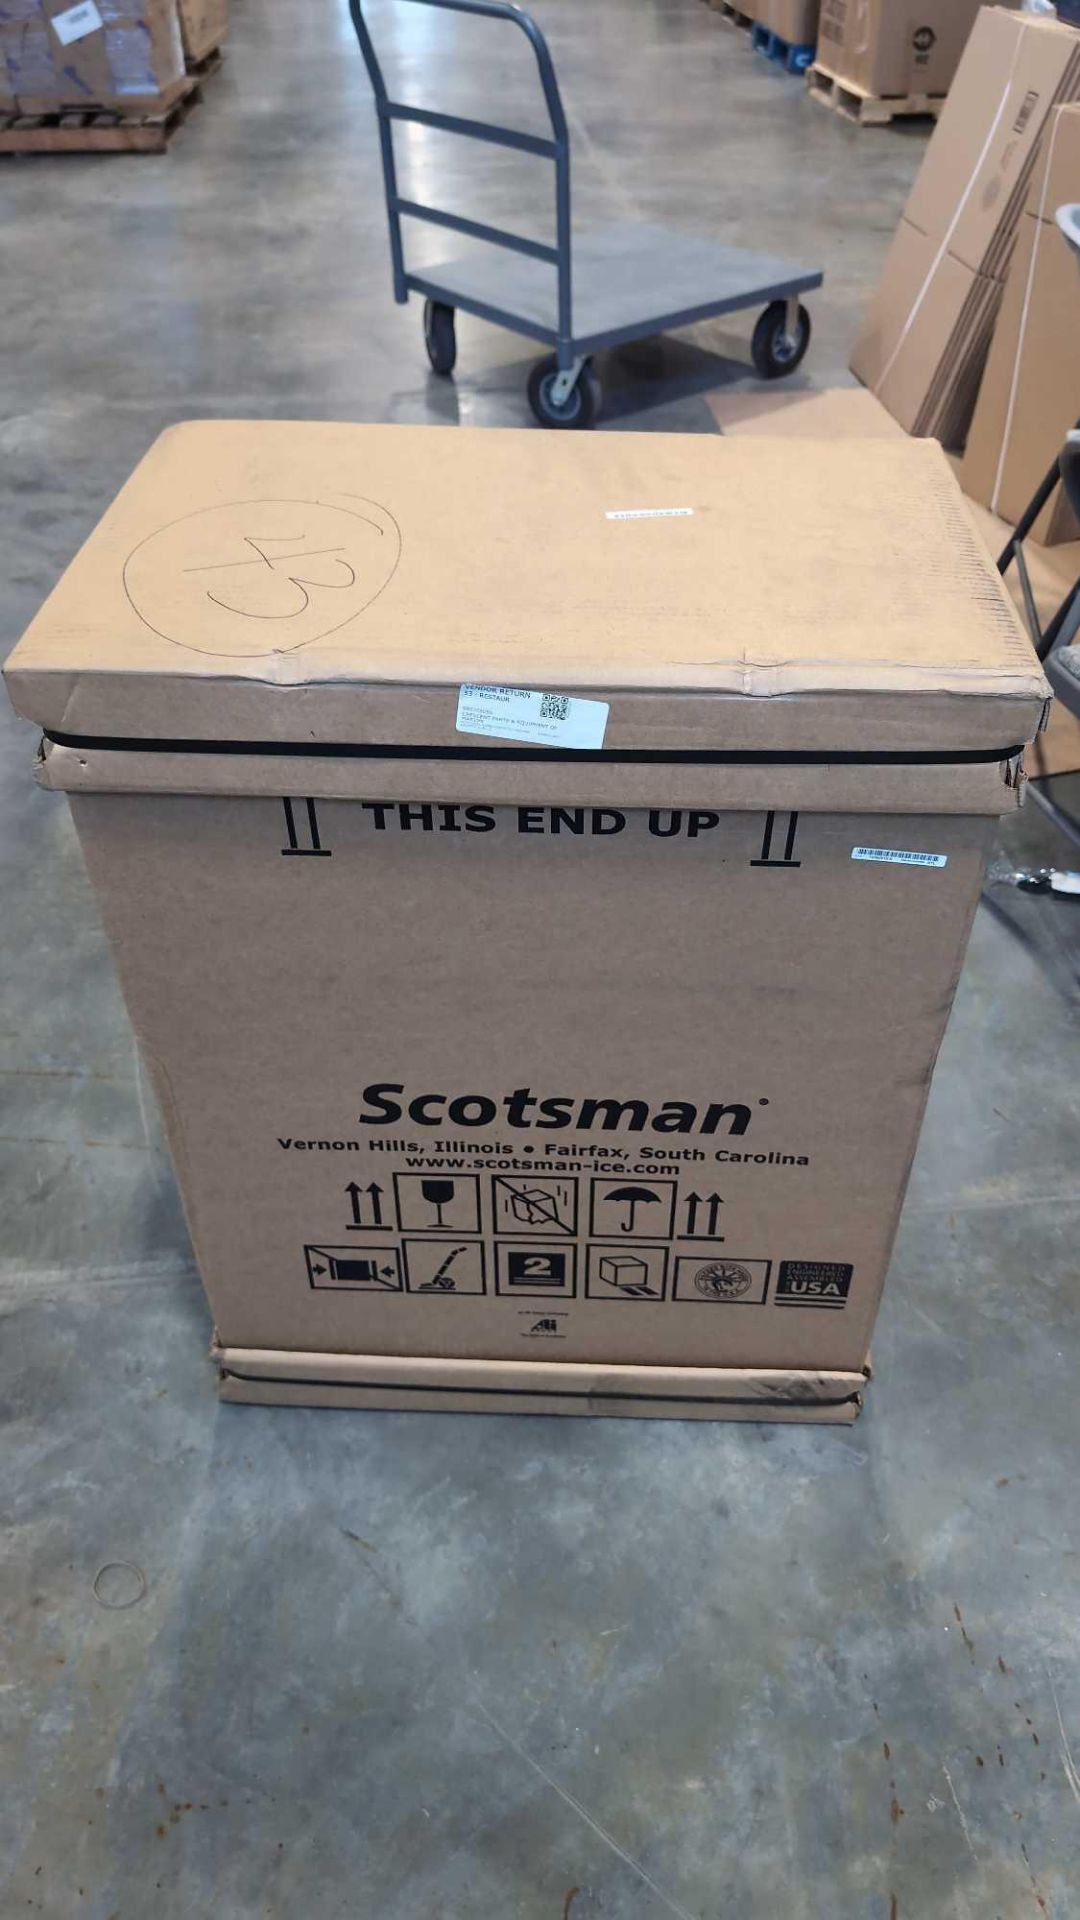 Scotsman ice machine 980309056 - Image 4 of 4